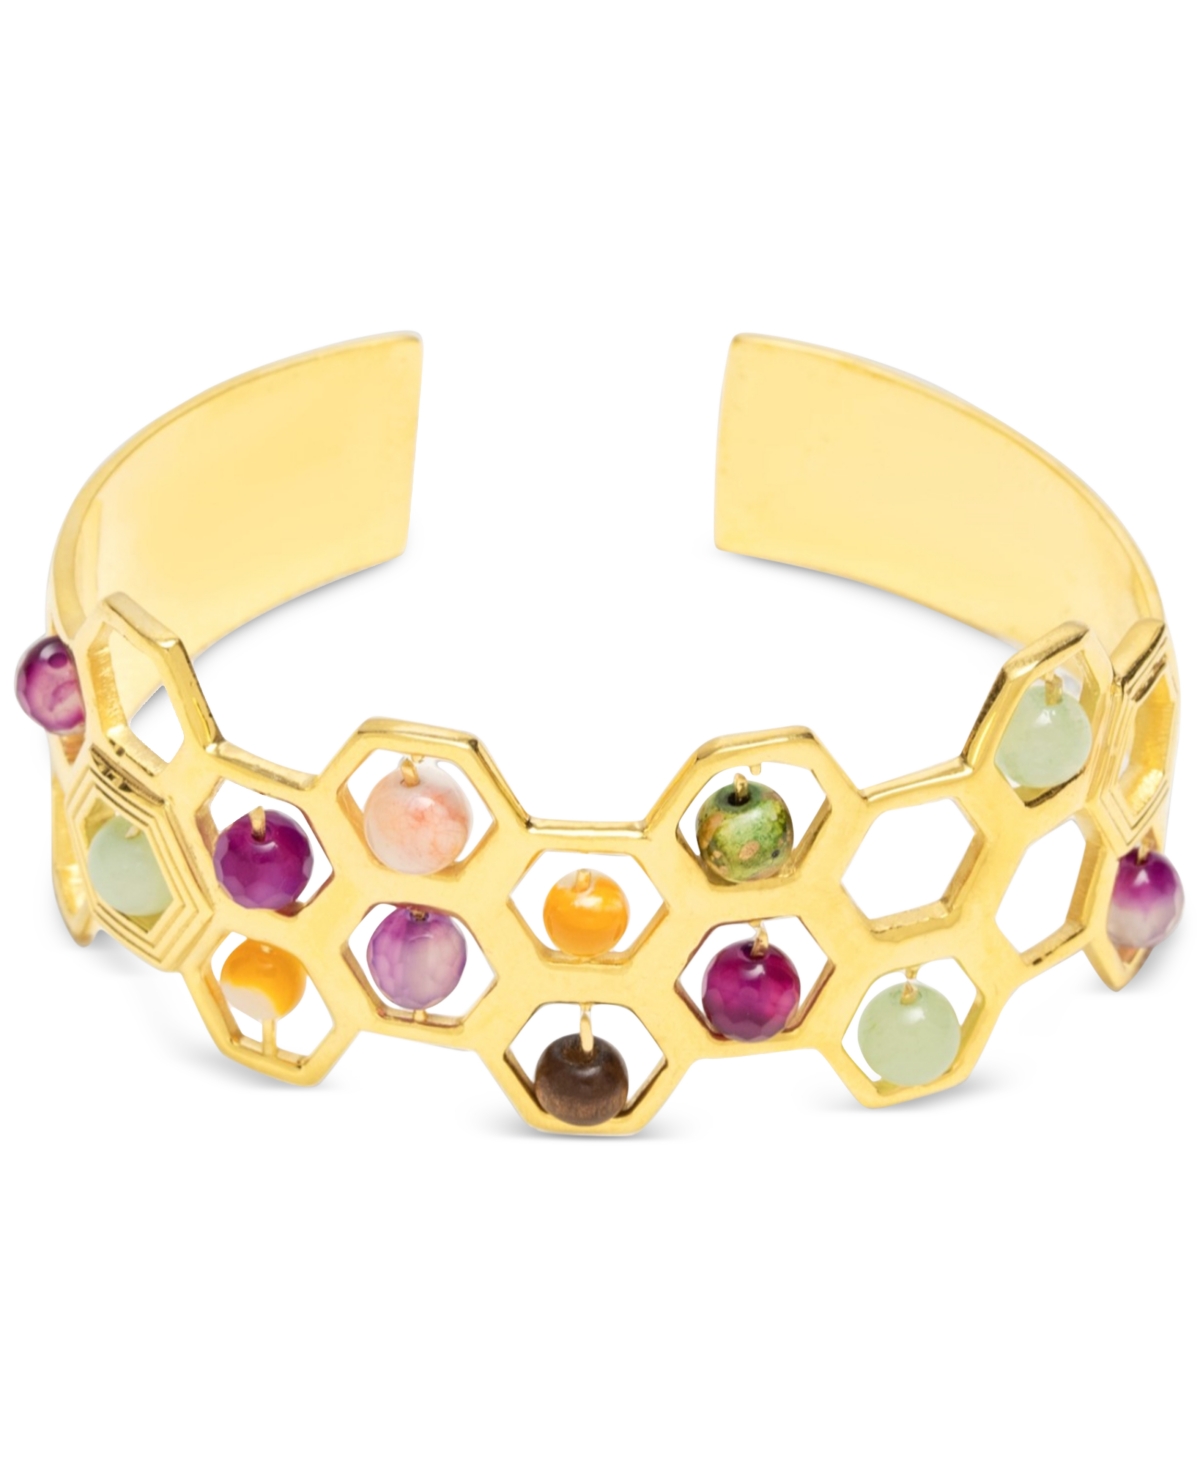 18k Gold-Plated Mixed Gemstone Cuff Bracelet - Yw Gld